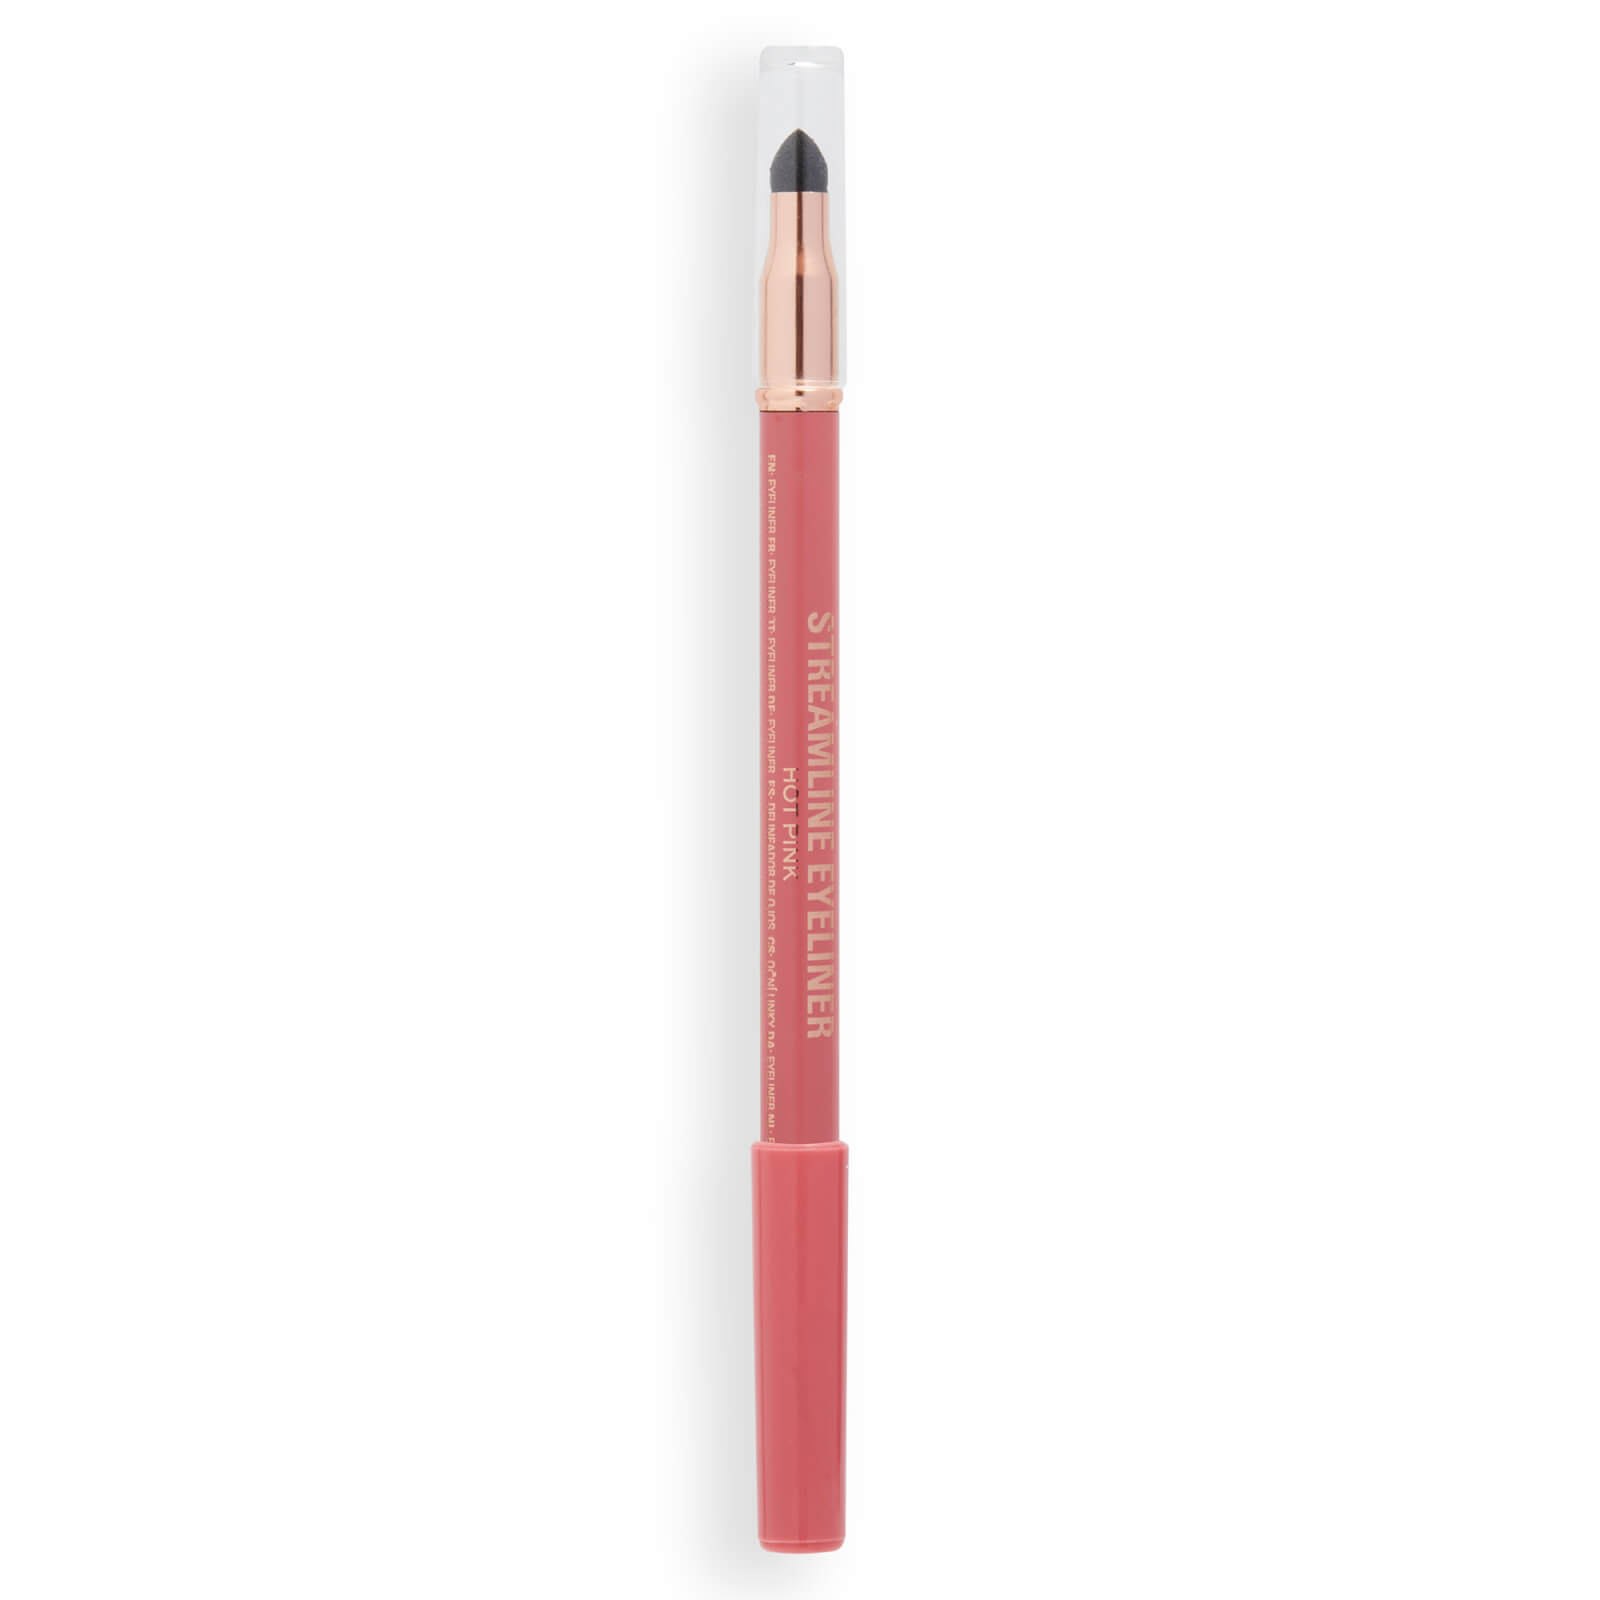 Makeup Revolution Streamline Waterline Eyeliner Pencil (Various Shades) - Pink